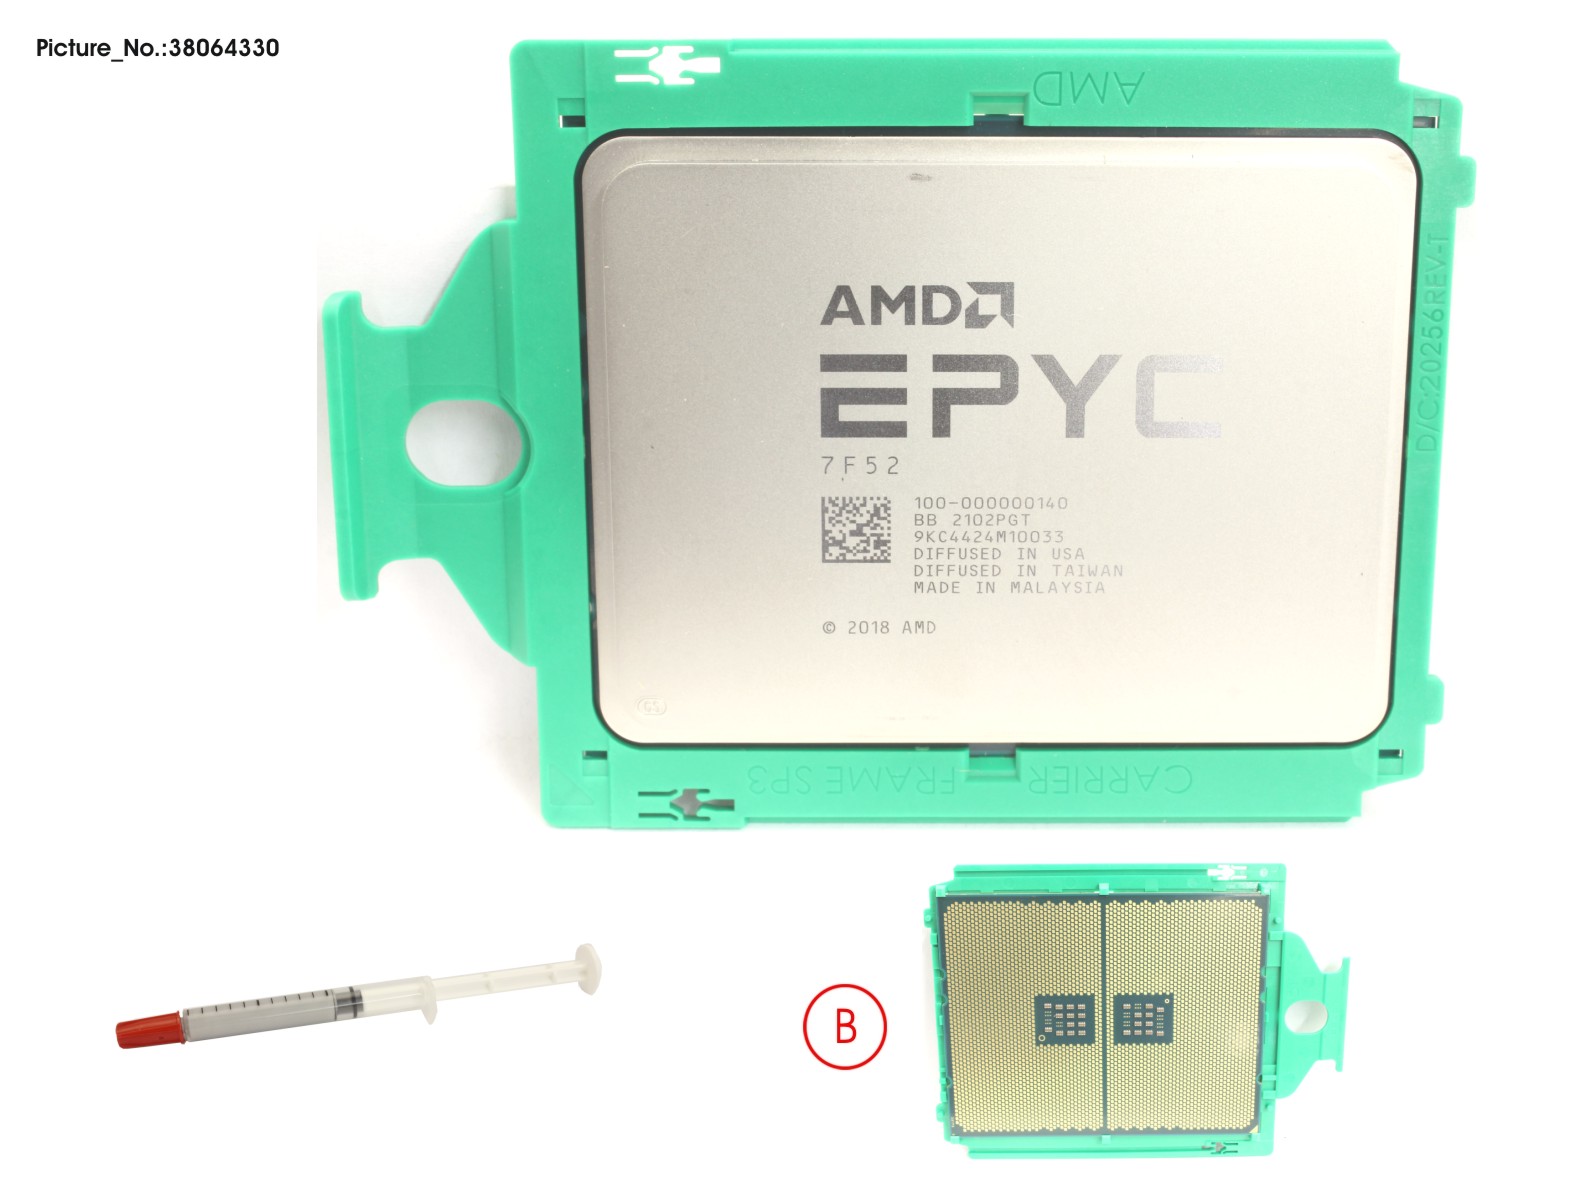 CPU SPARE AMD EPYC 7F52